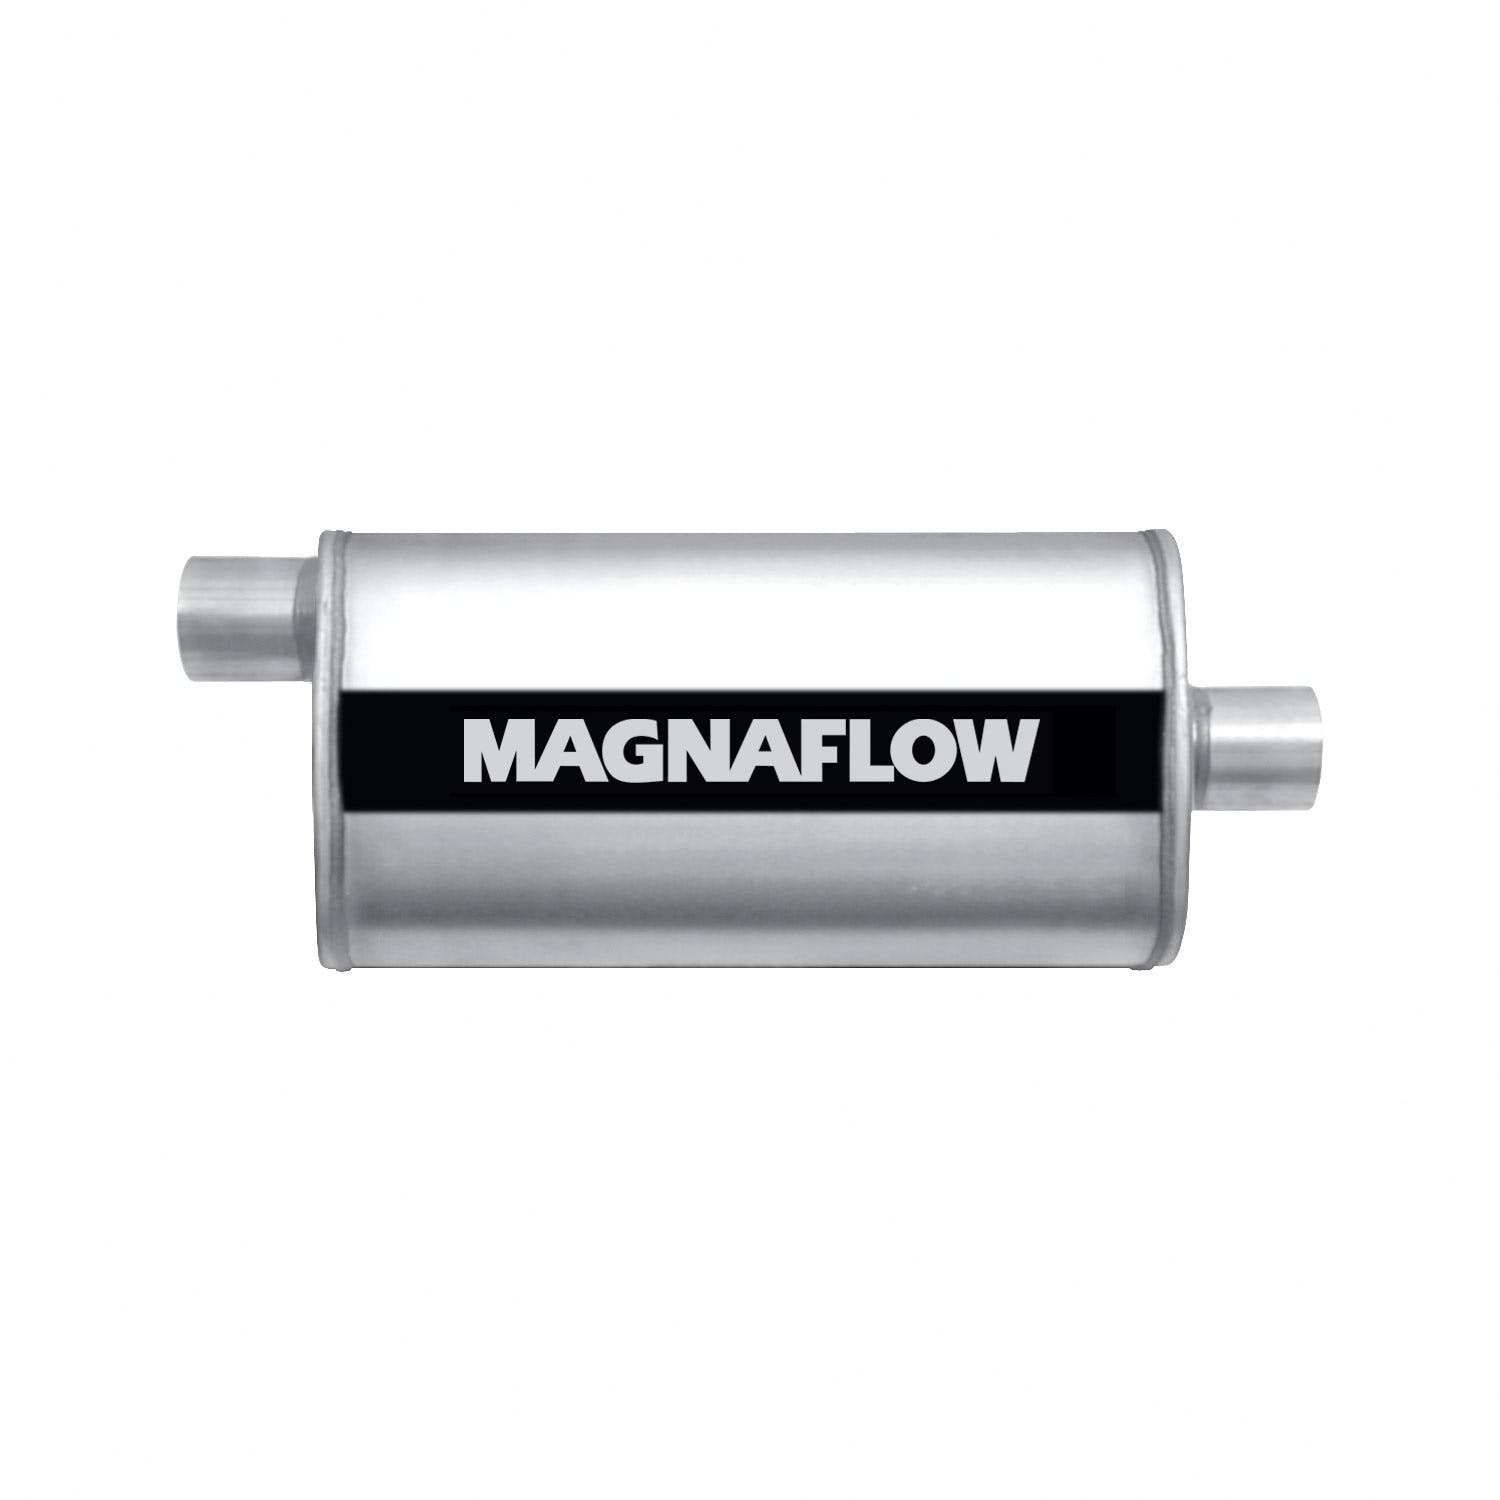 MagnaFlow Exhaust Products 11255 Universal Muffler